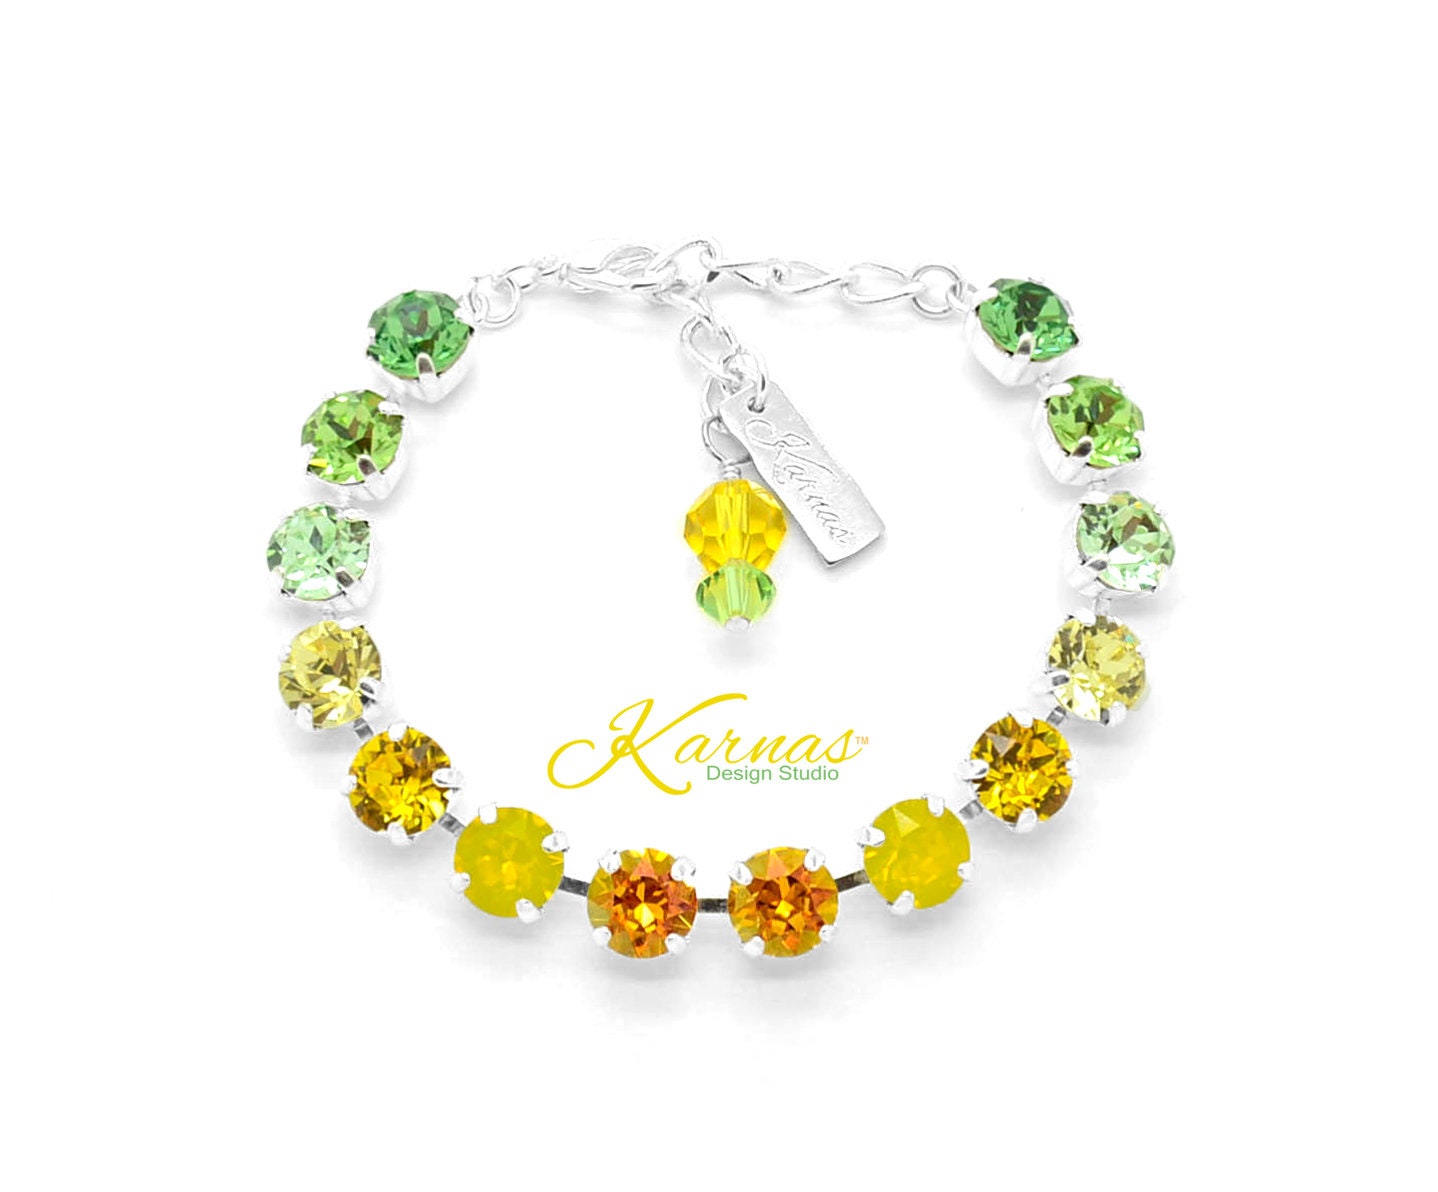 Delightful Daffodil 8mm Charm Bracelet Genuine K.d.s. Premium Crystal Choose Your Finish Karnas Design Studio Free Shipping